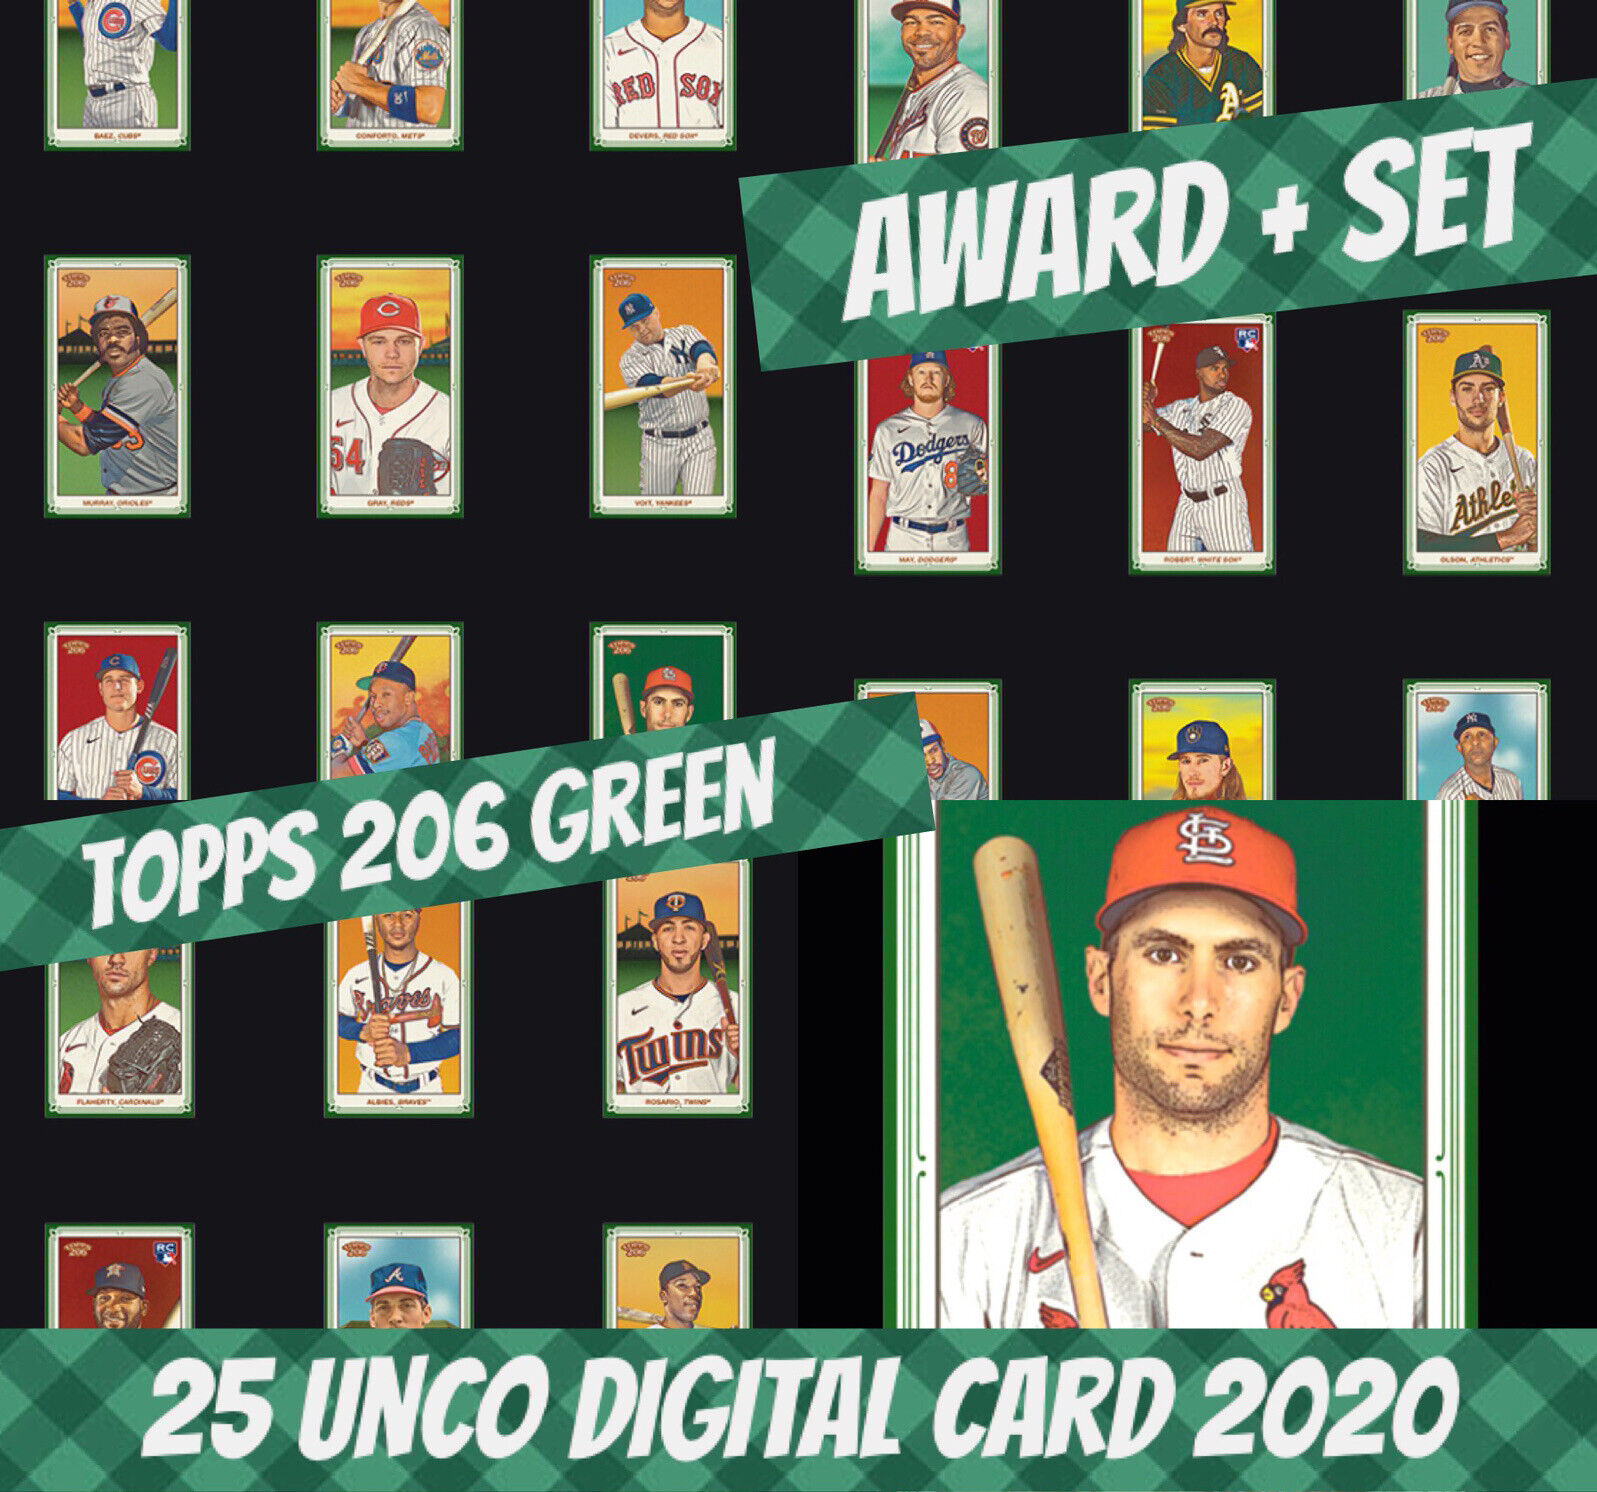 Topps Colorful 206 Unco Paul Goldschmidt Award + Set (1+24) 2020 Digital